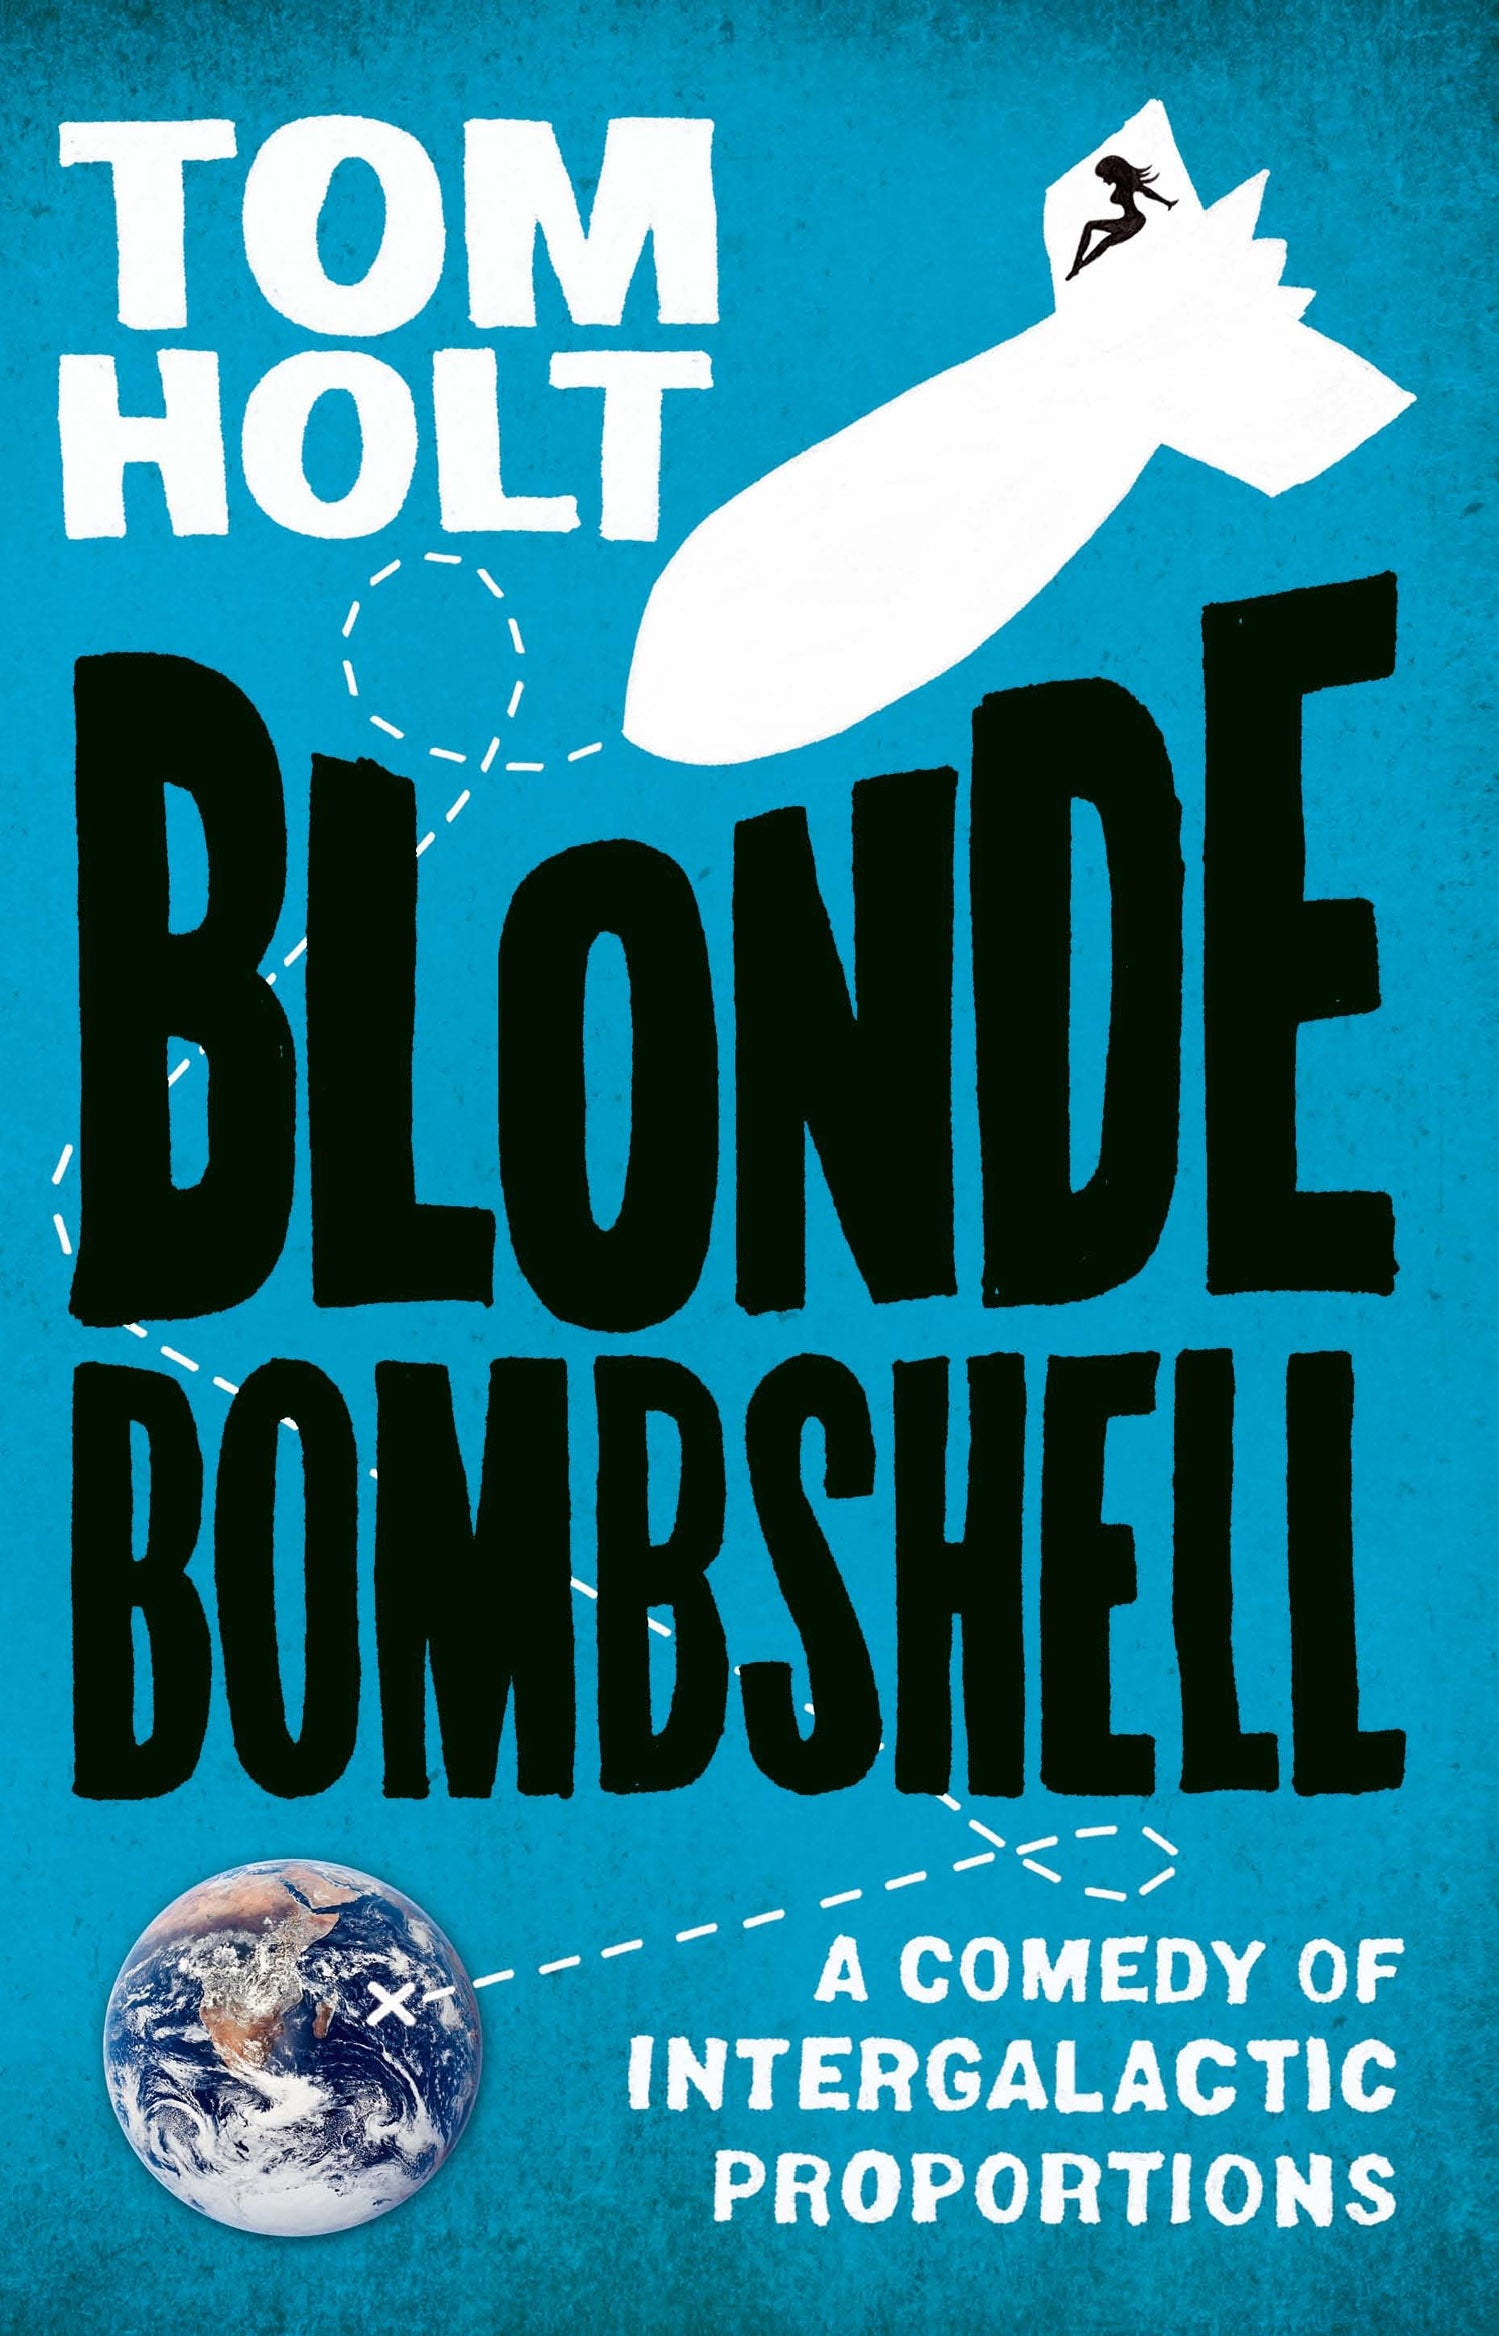 Blonde Bombshell by Tom Holt